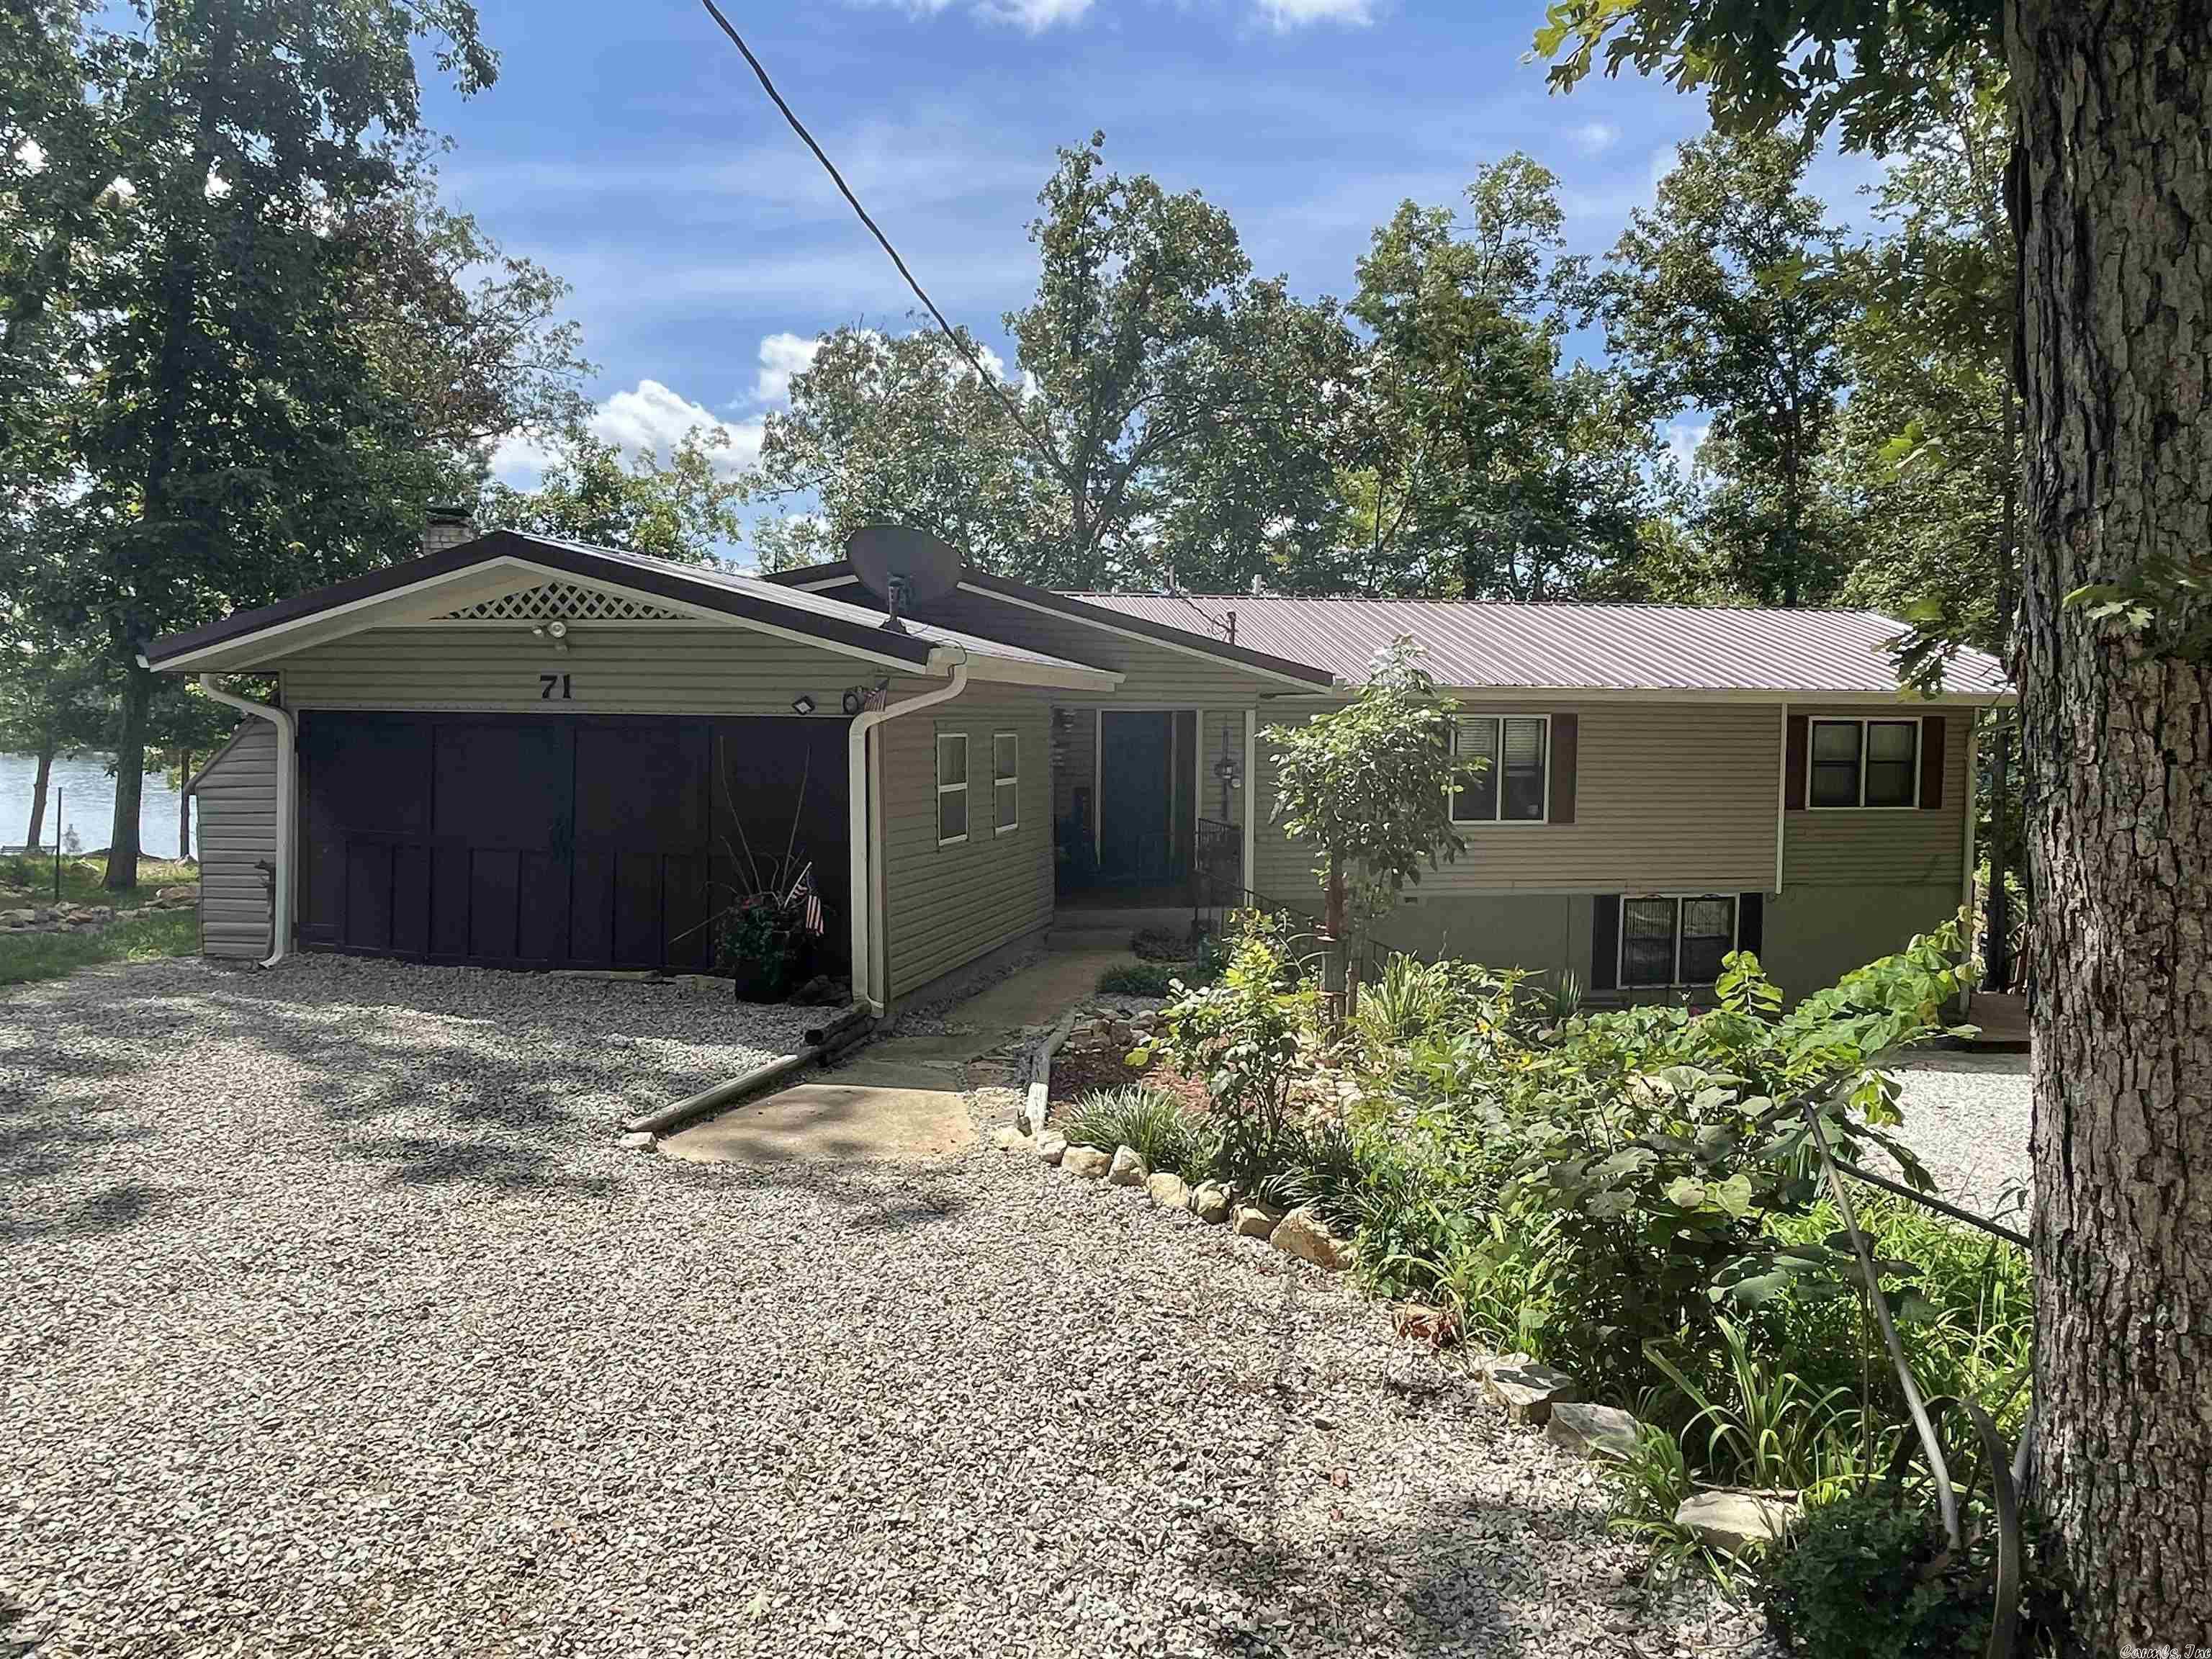 Residential for sale – 71  Lakeside   Williford, AR